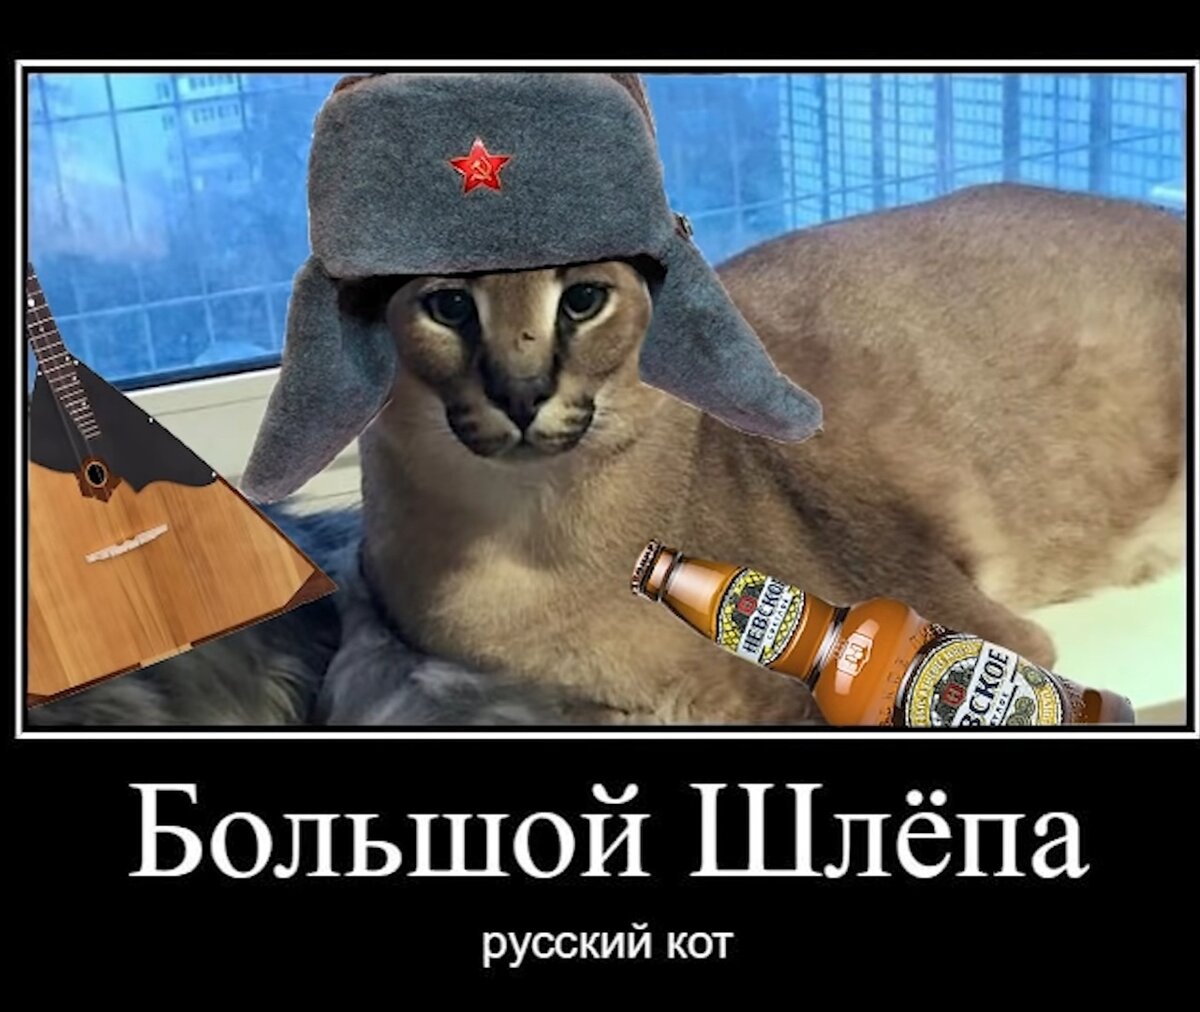 Шлепа русский кот